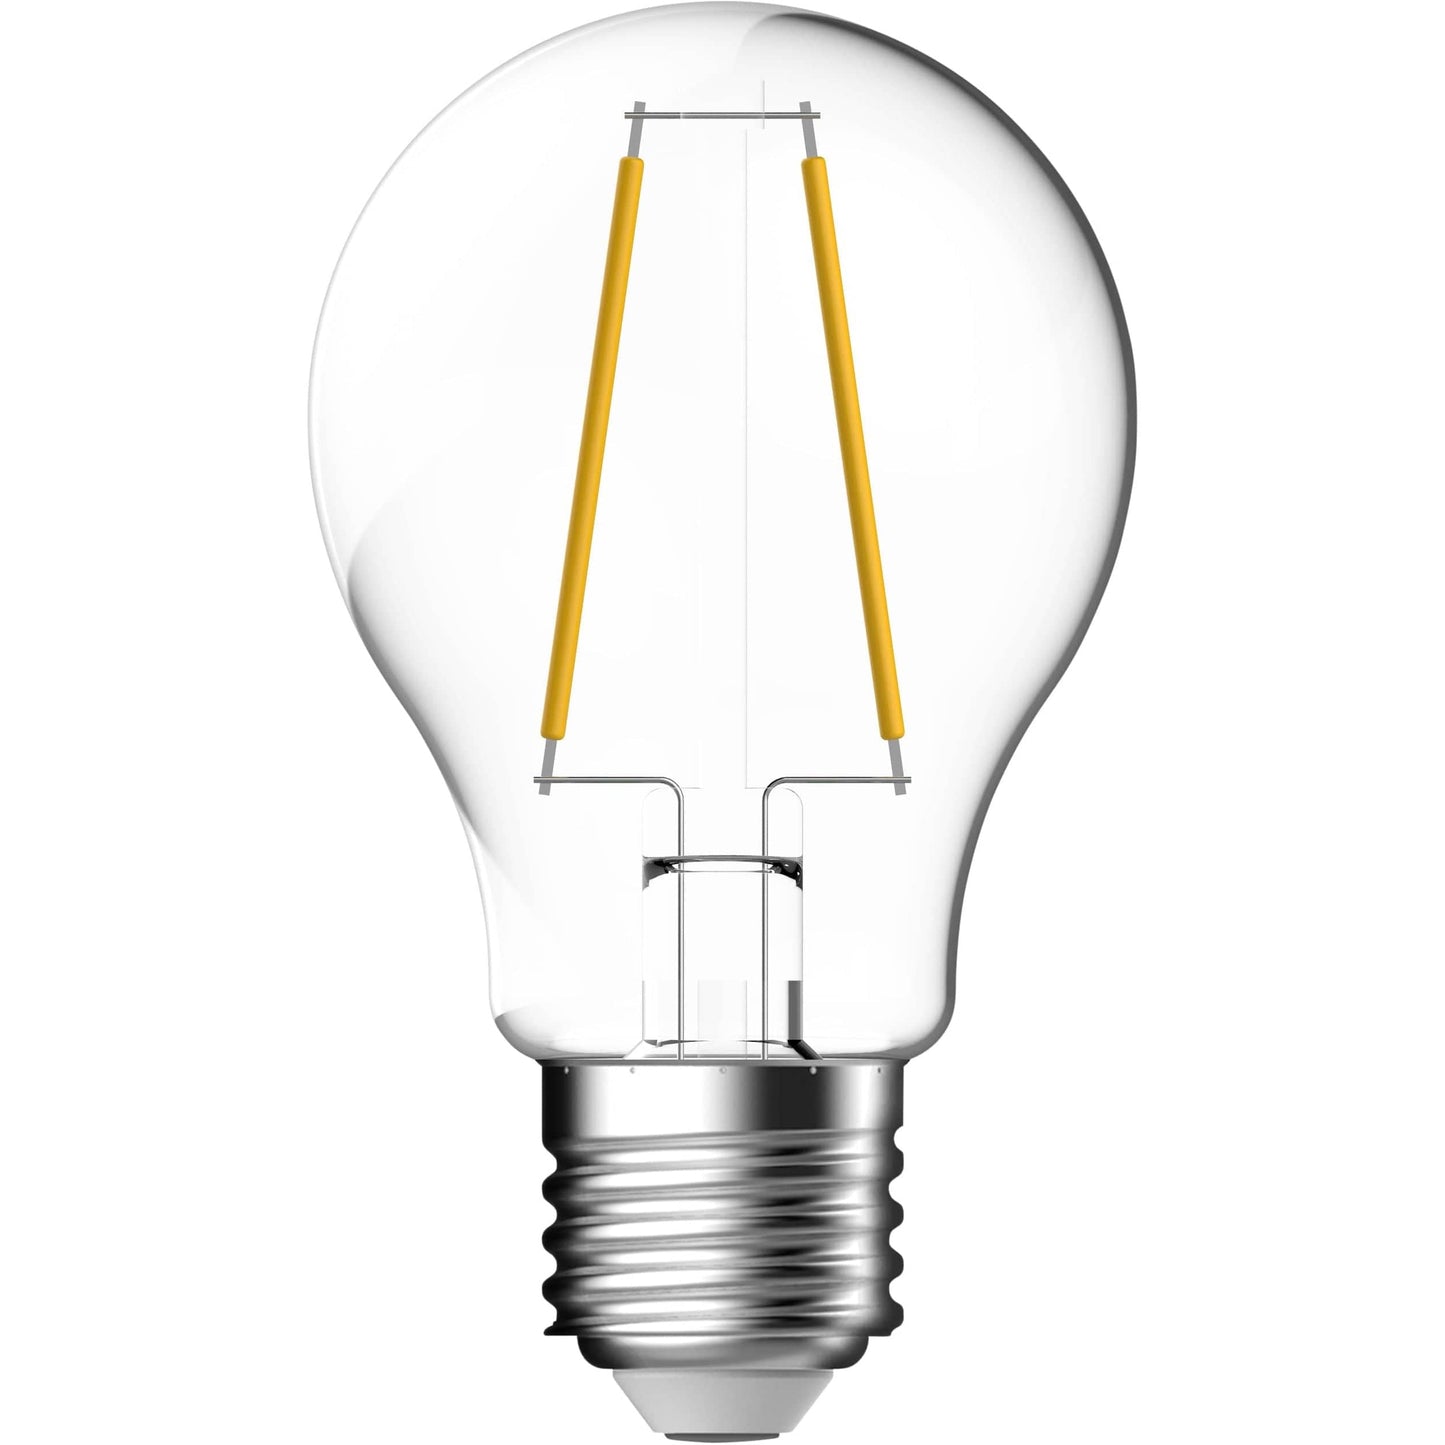 Energetic Light Bulbs Single E27 Clear Bulb, Cold White, 7.8W